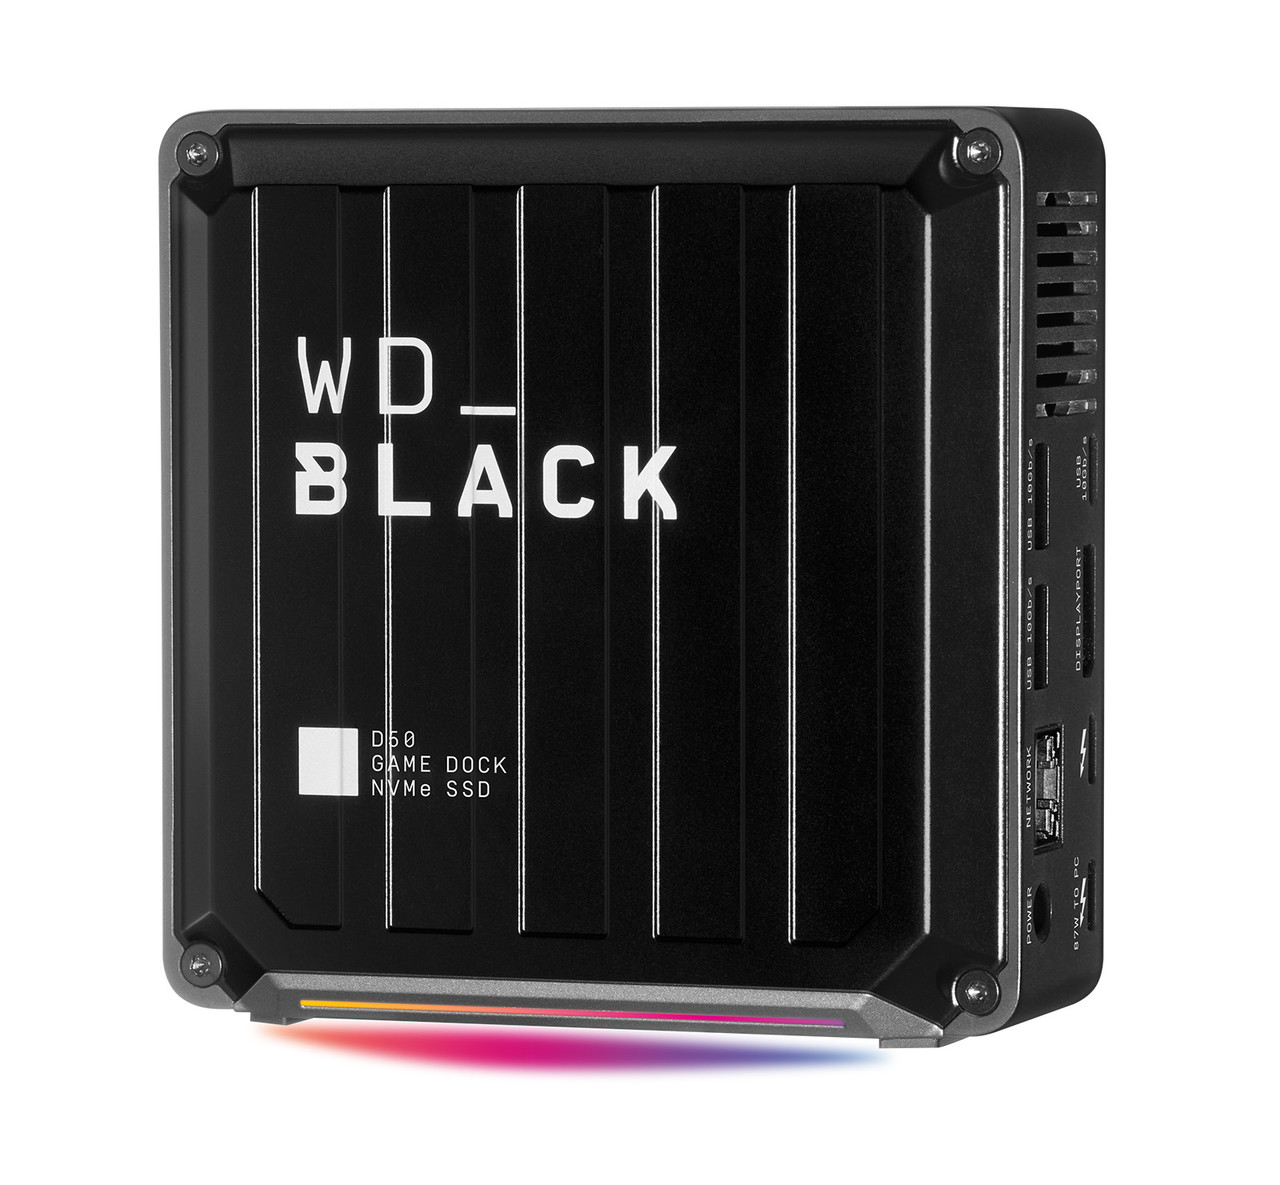 ▲ WD_BLACK D50 게임 독 NVMe SSD